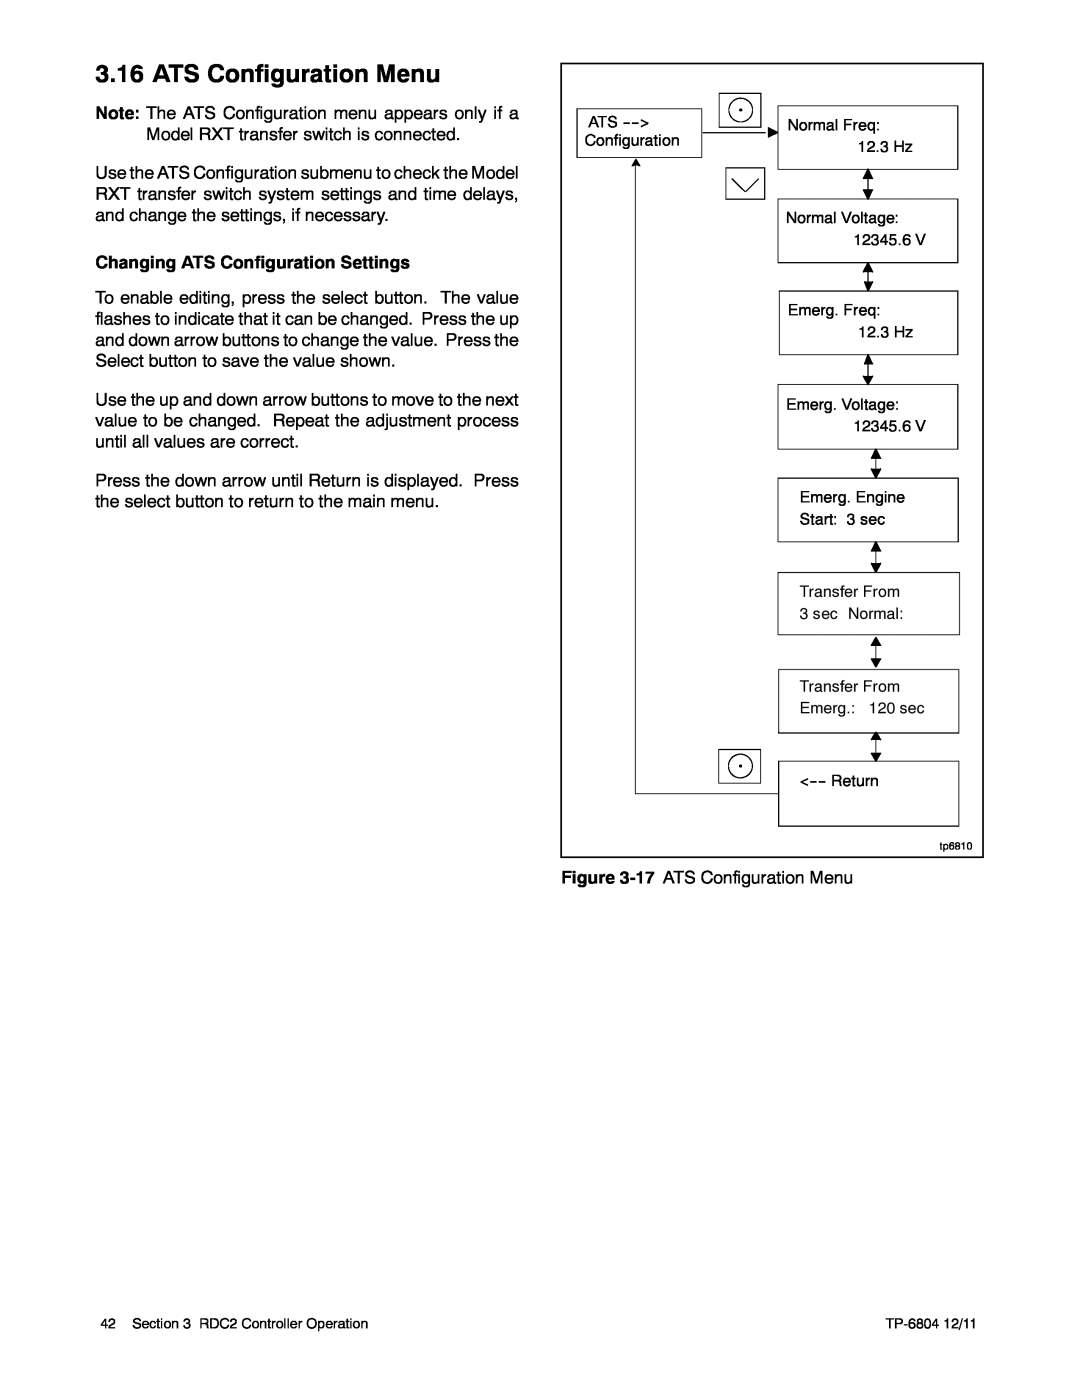 Kohler 14/20RESAL manual ATS Configuration Menu 